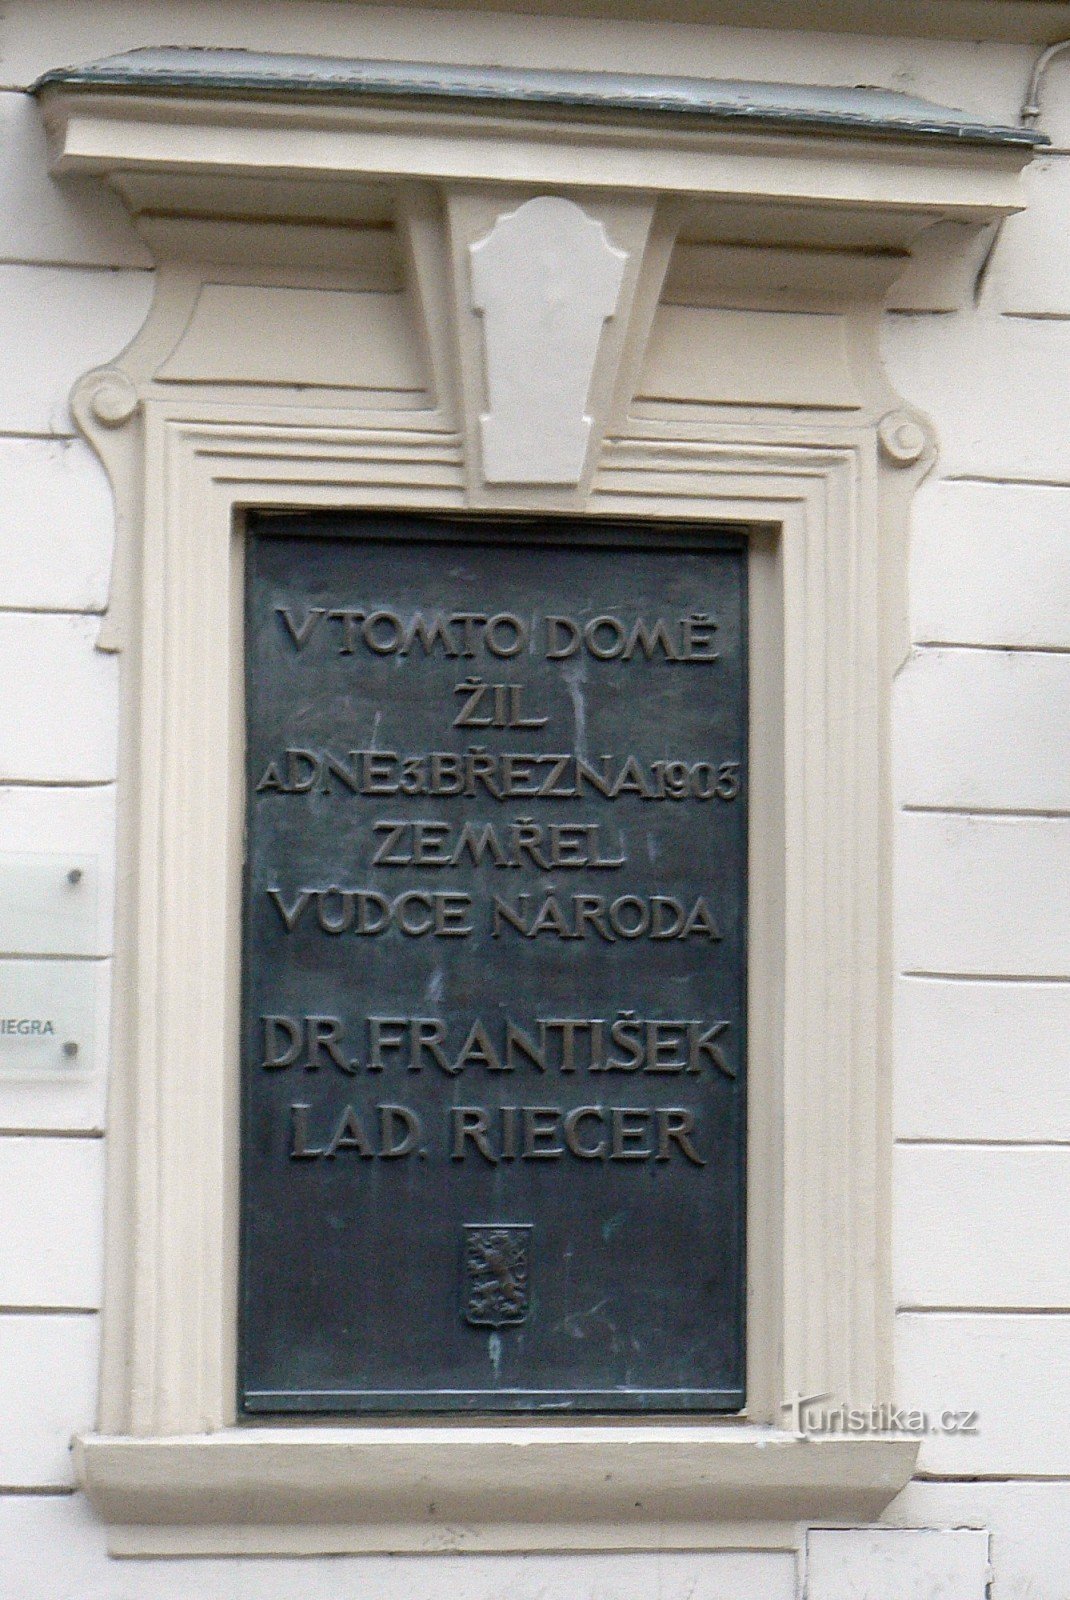 Placă memorială František Ladislav Rieger